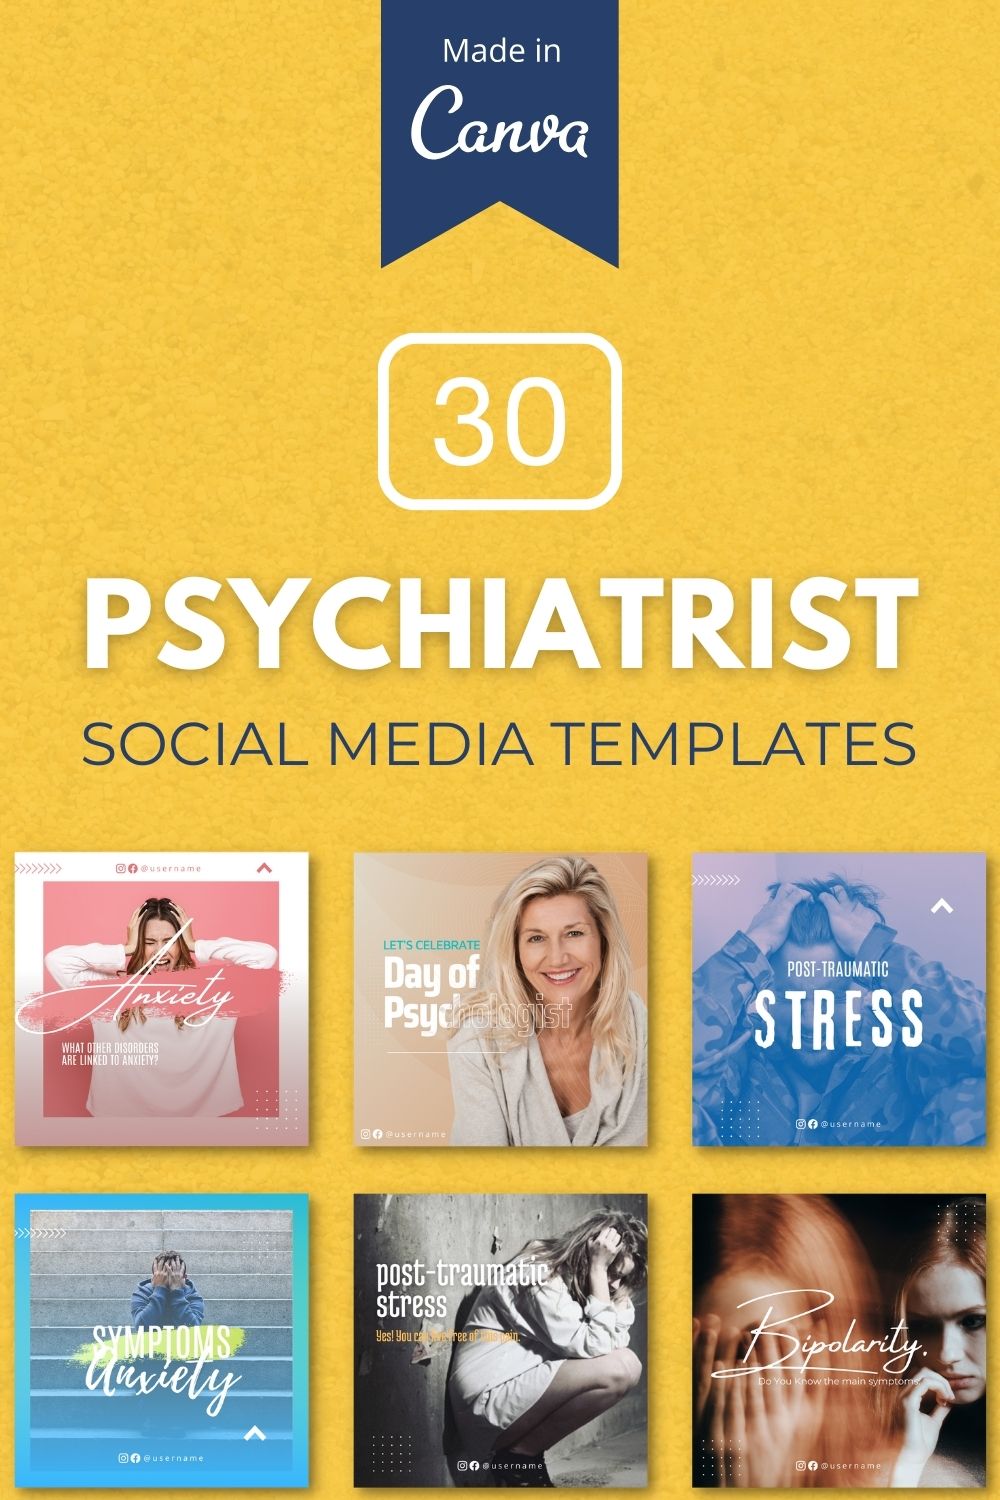 30 Psychiatrist Canva Templates For Social Media pinterest preview image.